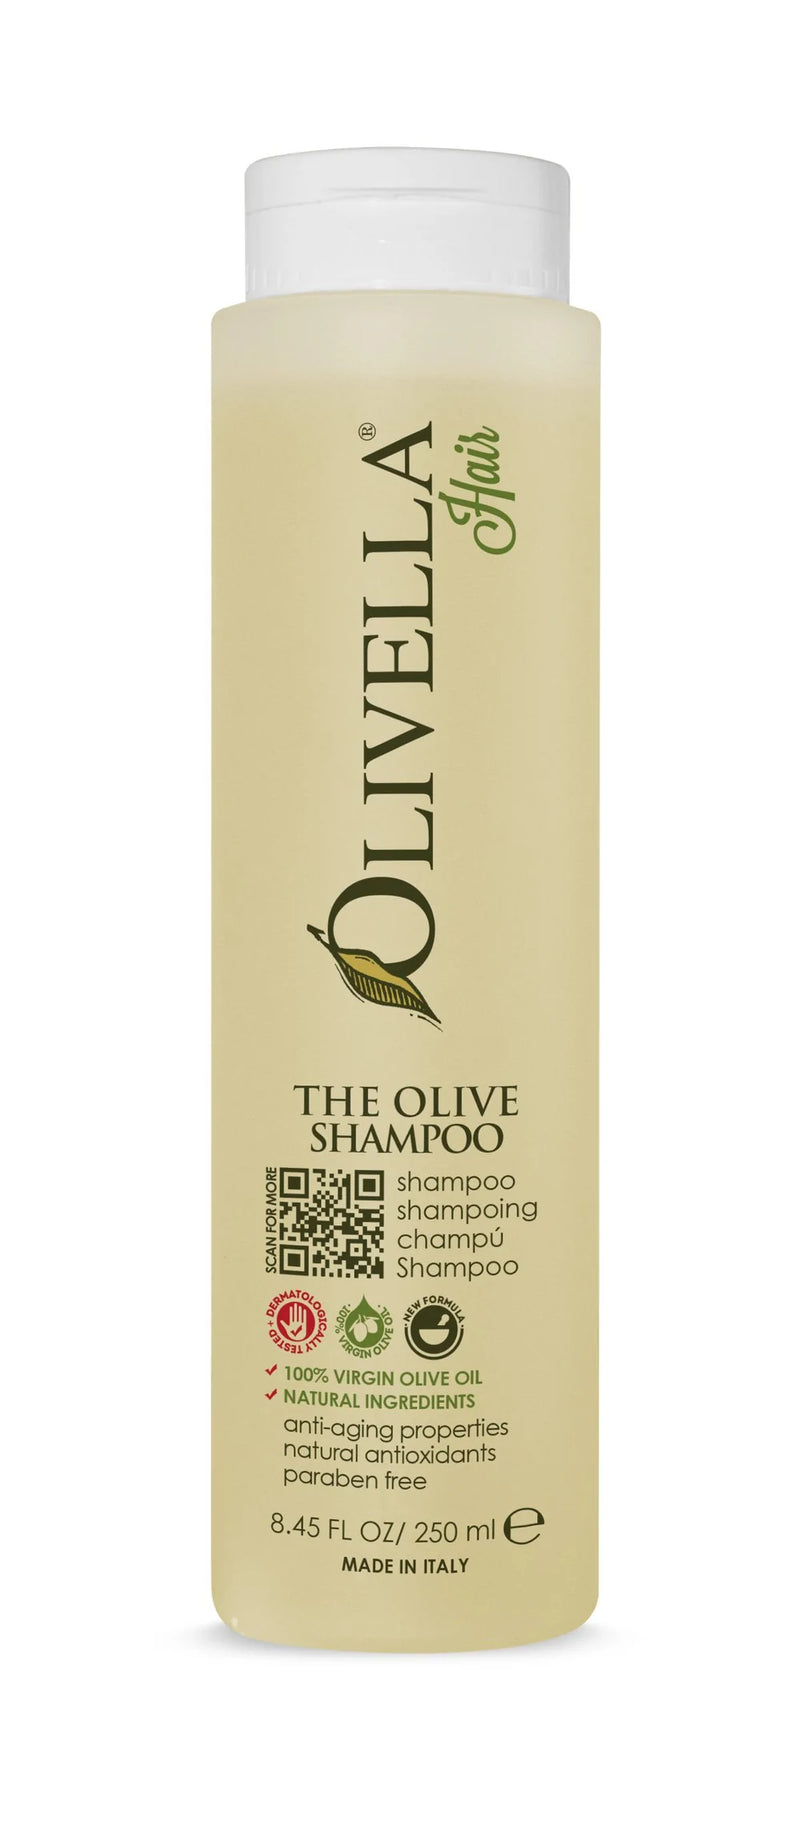 Olivella Shampoo & Conditioner